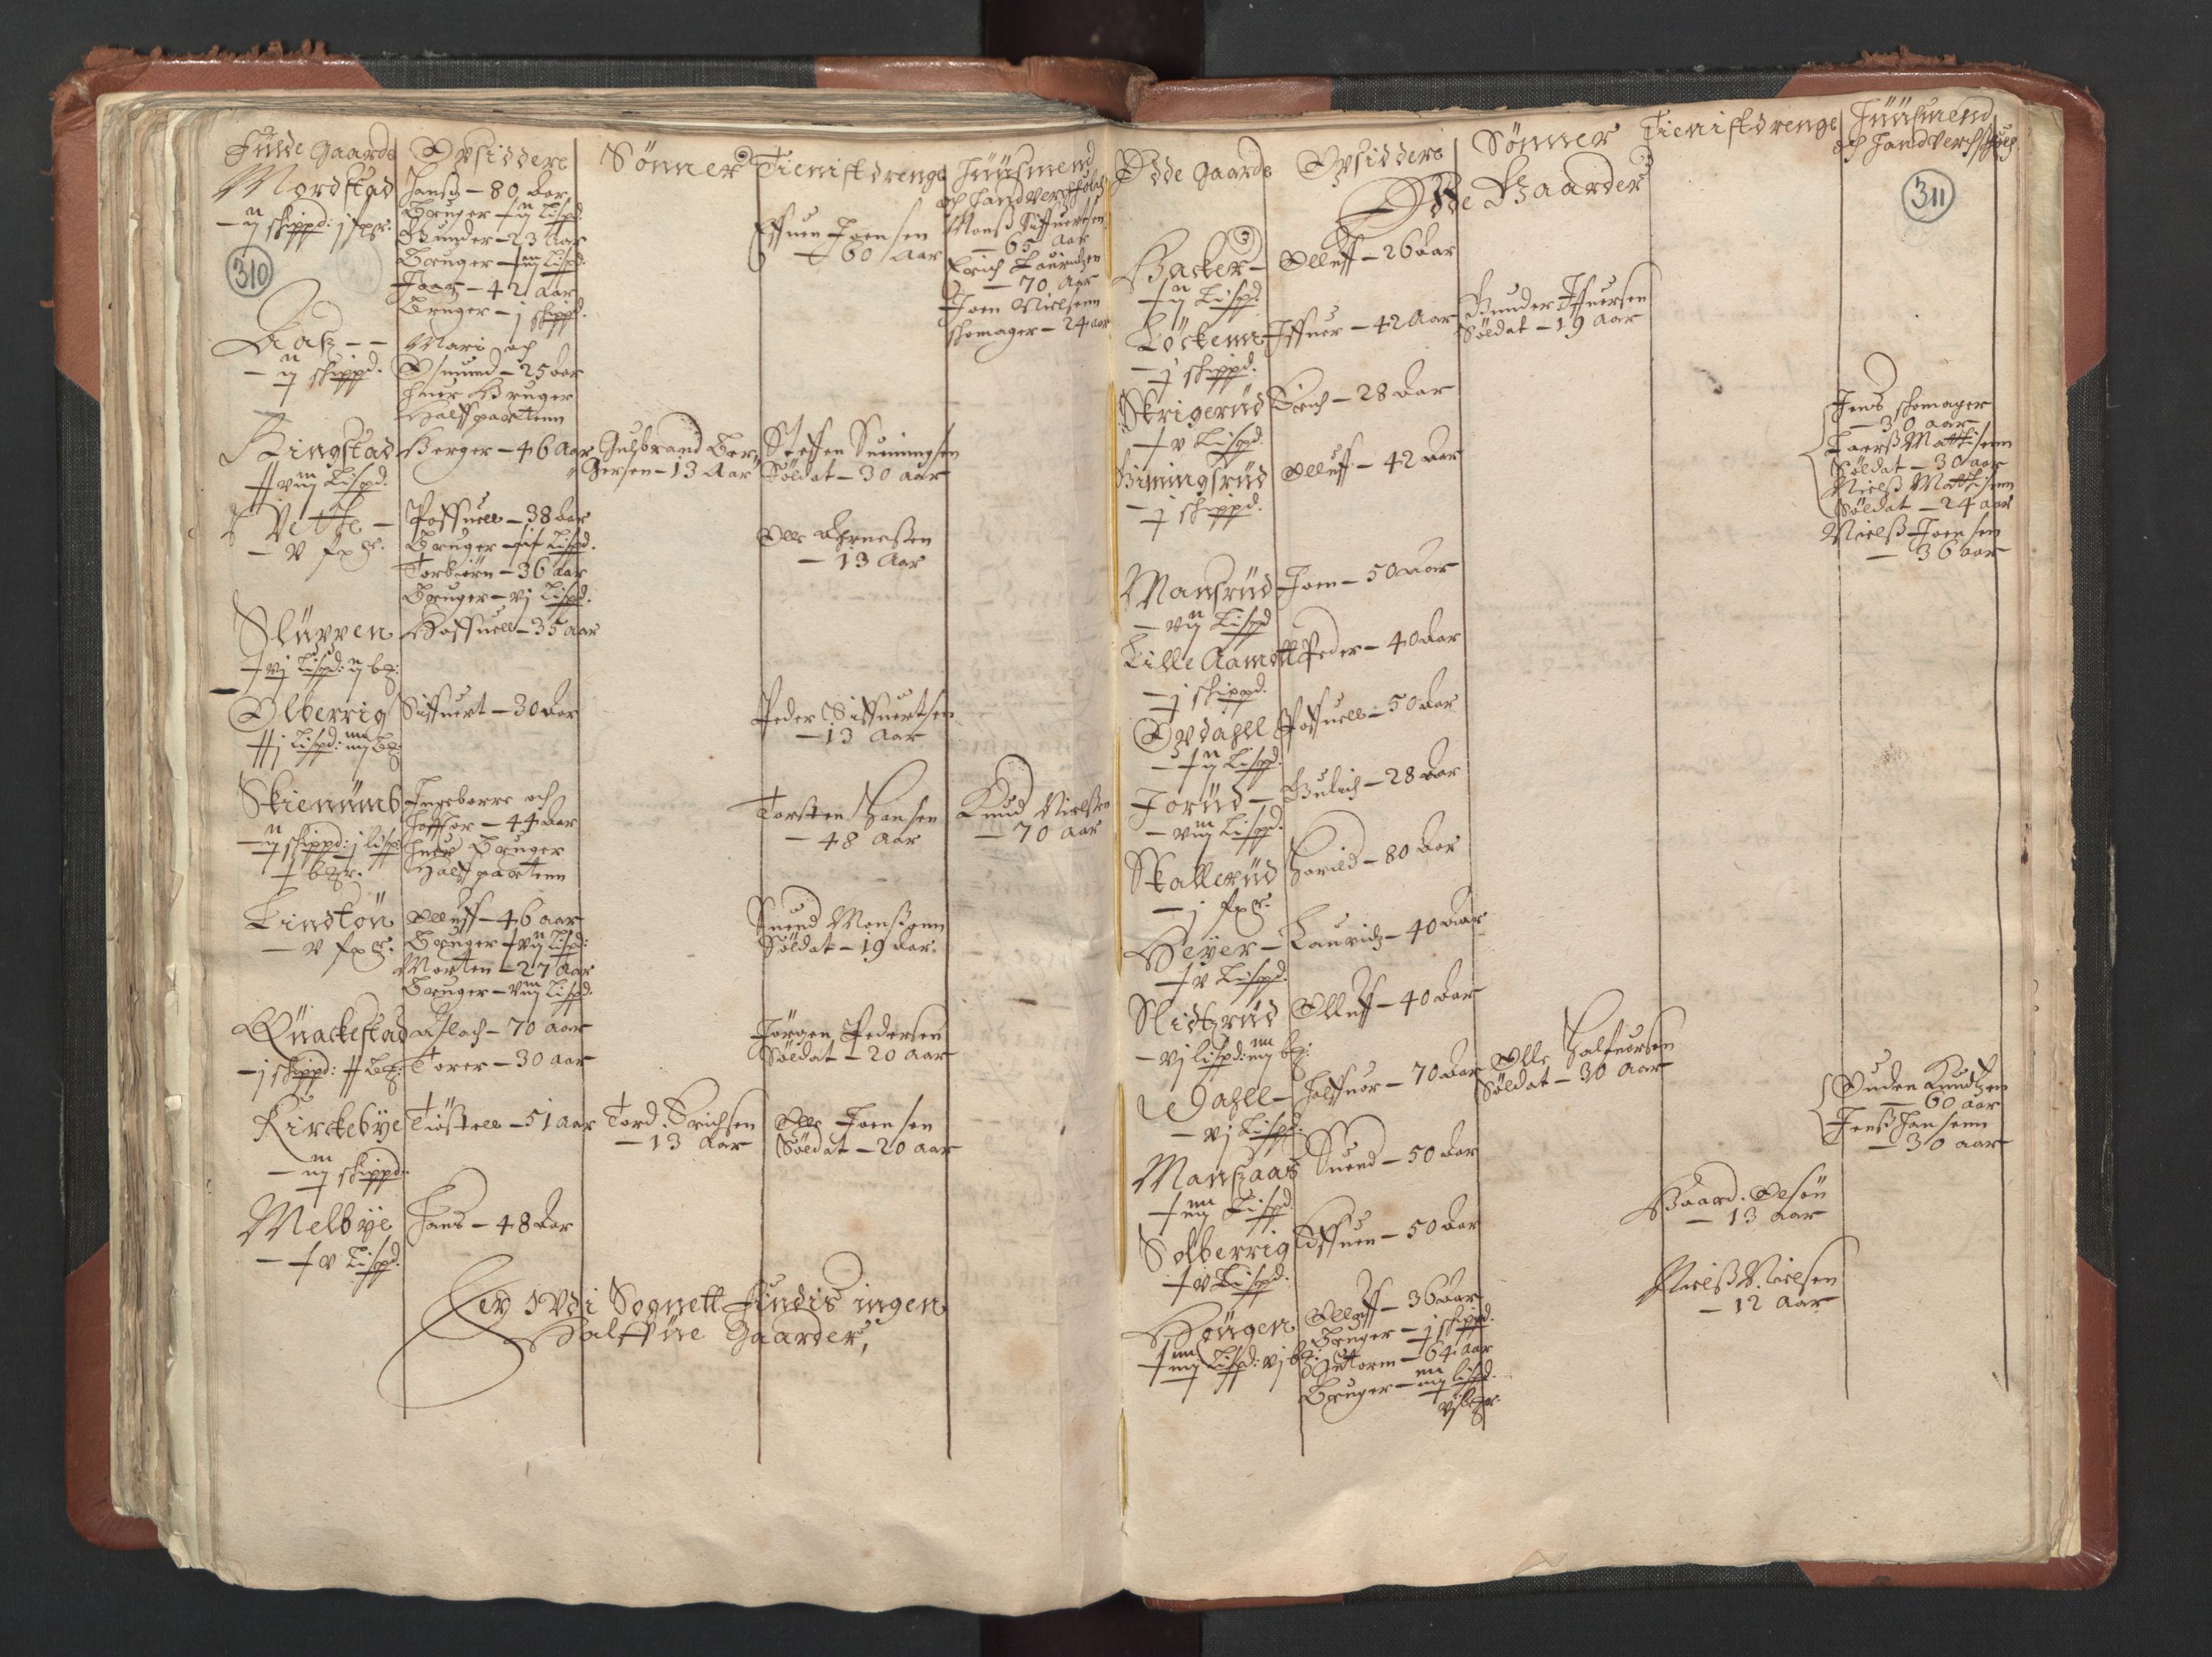 RA, Fogdenes og sorenskrivernes manntall 1664-1666, nr. 1: Fogderier (len og skipreider) i nåværende Østfold fylke, 1664, s. 310-311